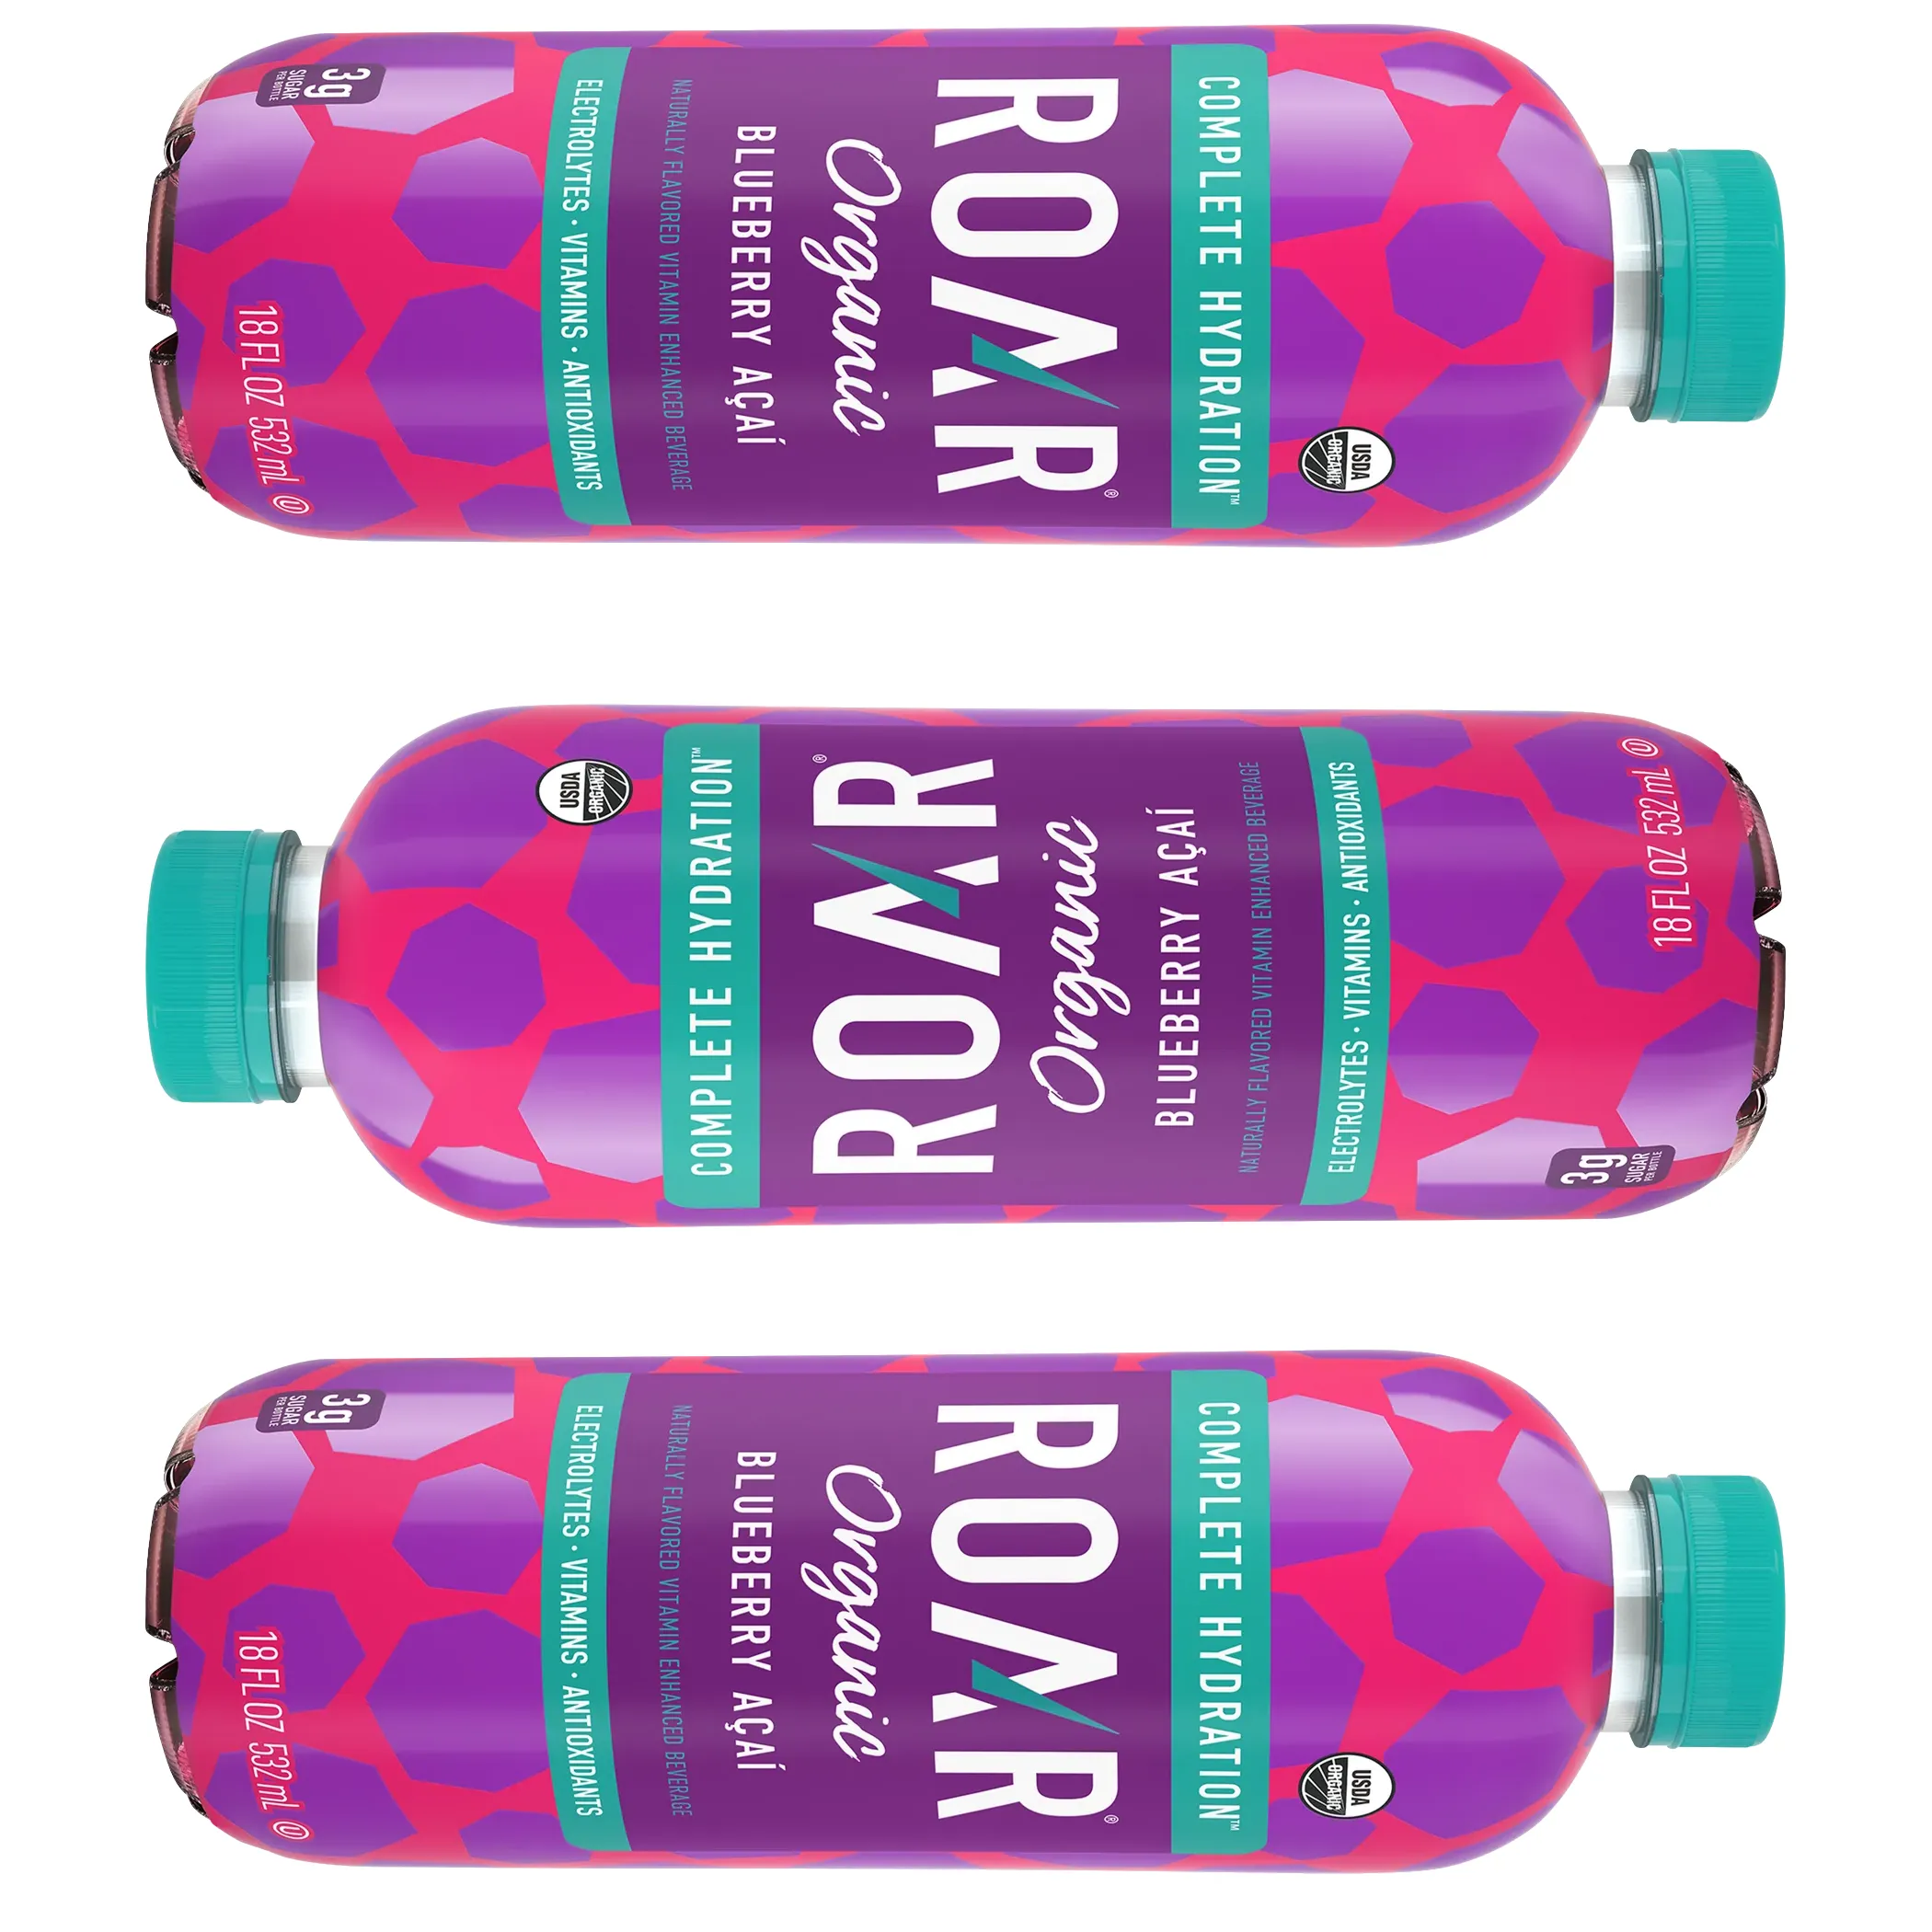 Free Roar Organic Beverages